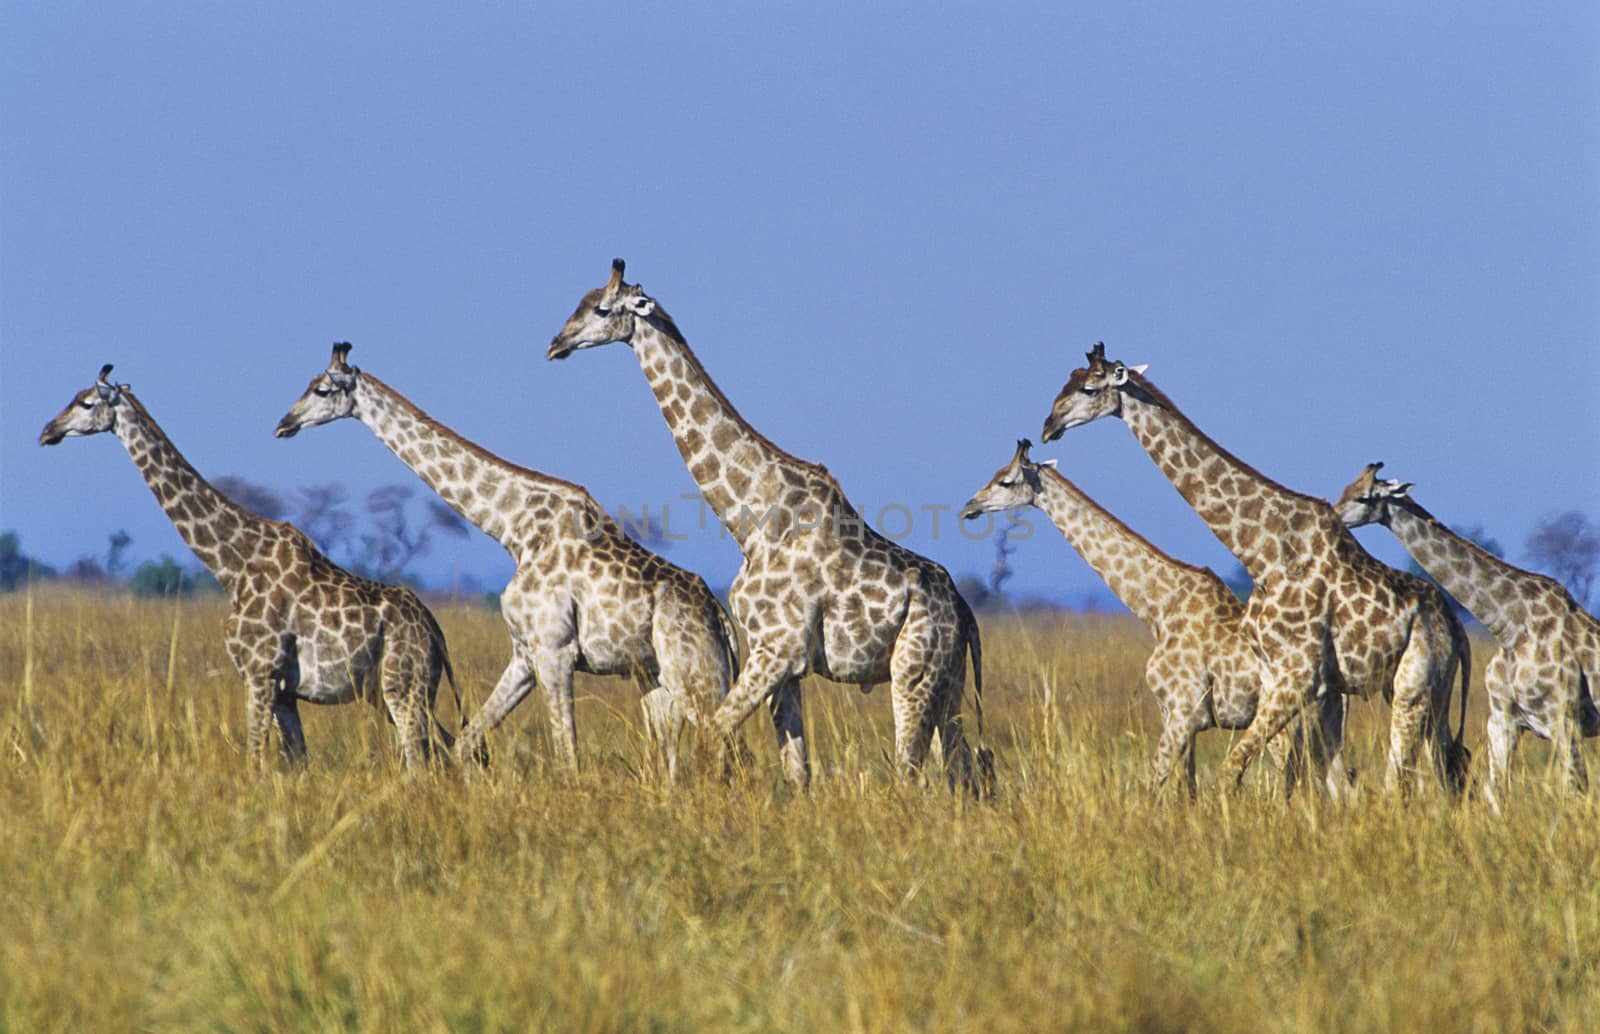 Group of maasai giraffes (giraffa camelopardalus) by Jaanaaa